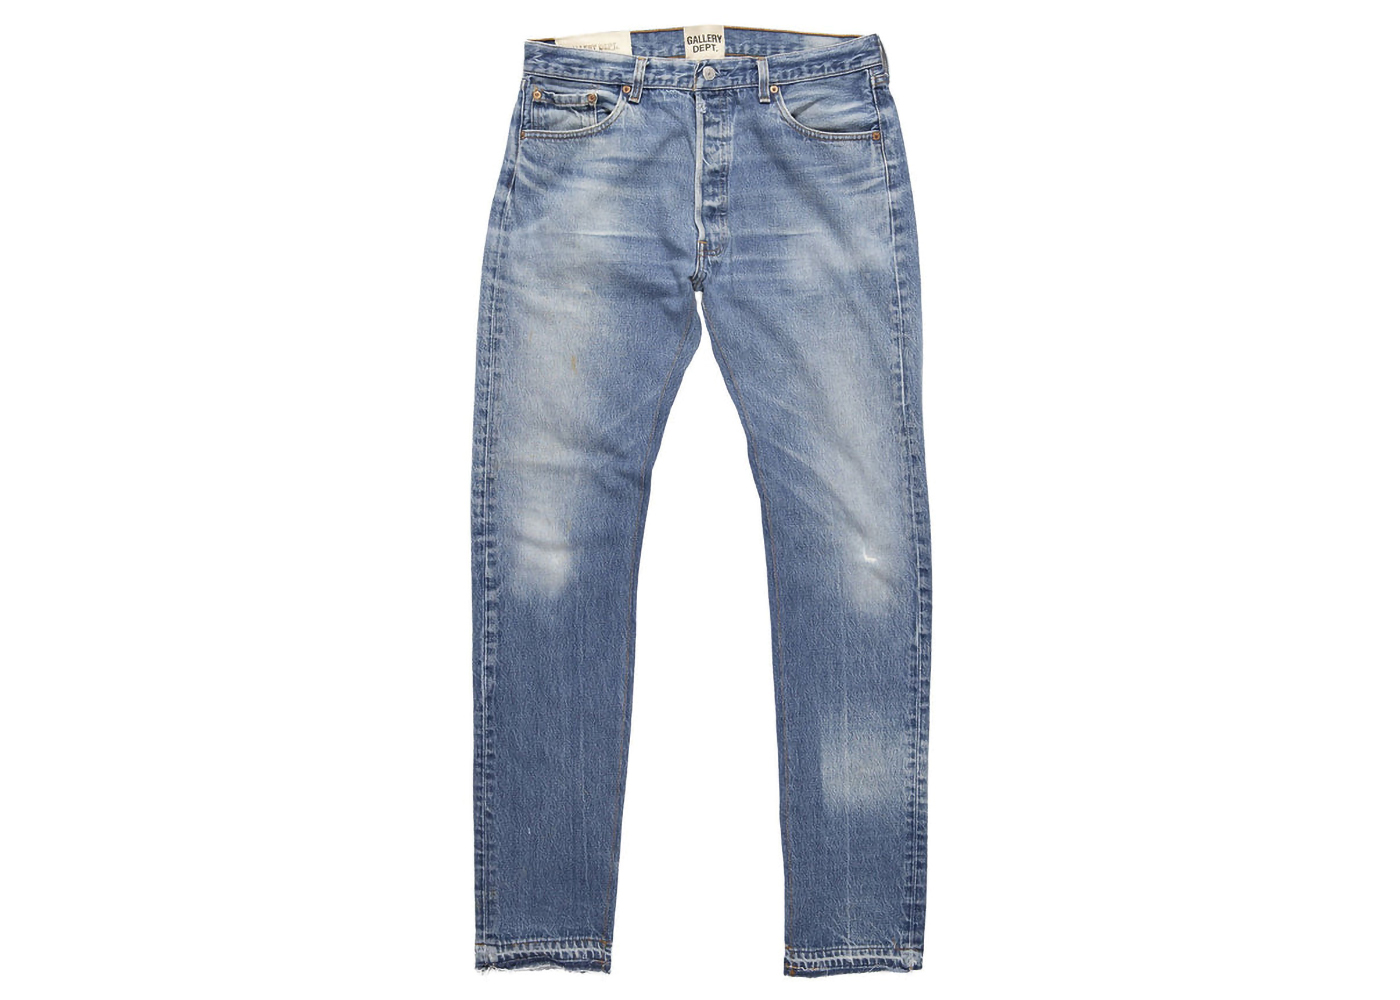 Gallery Dept. 5001 Jeans Indigo Denim Men's - US